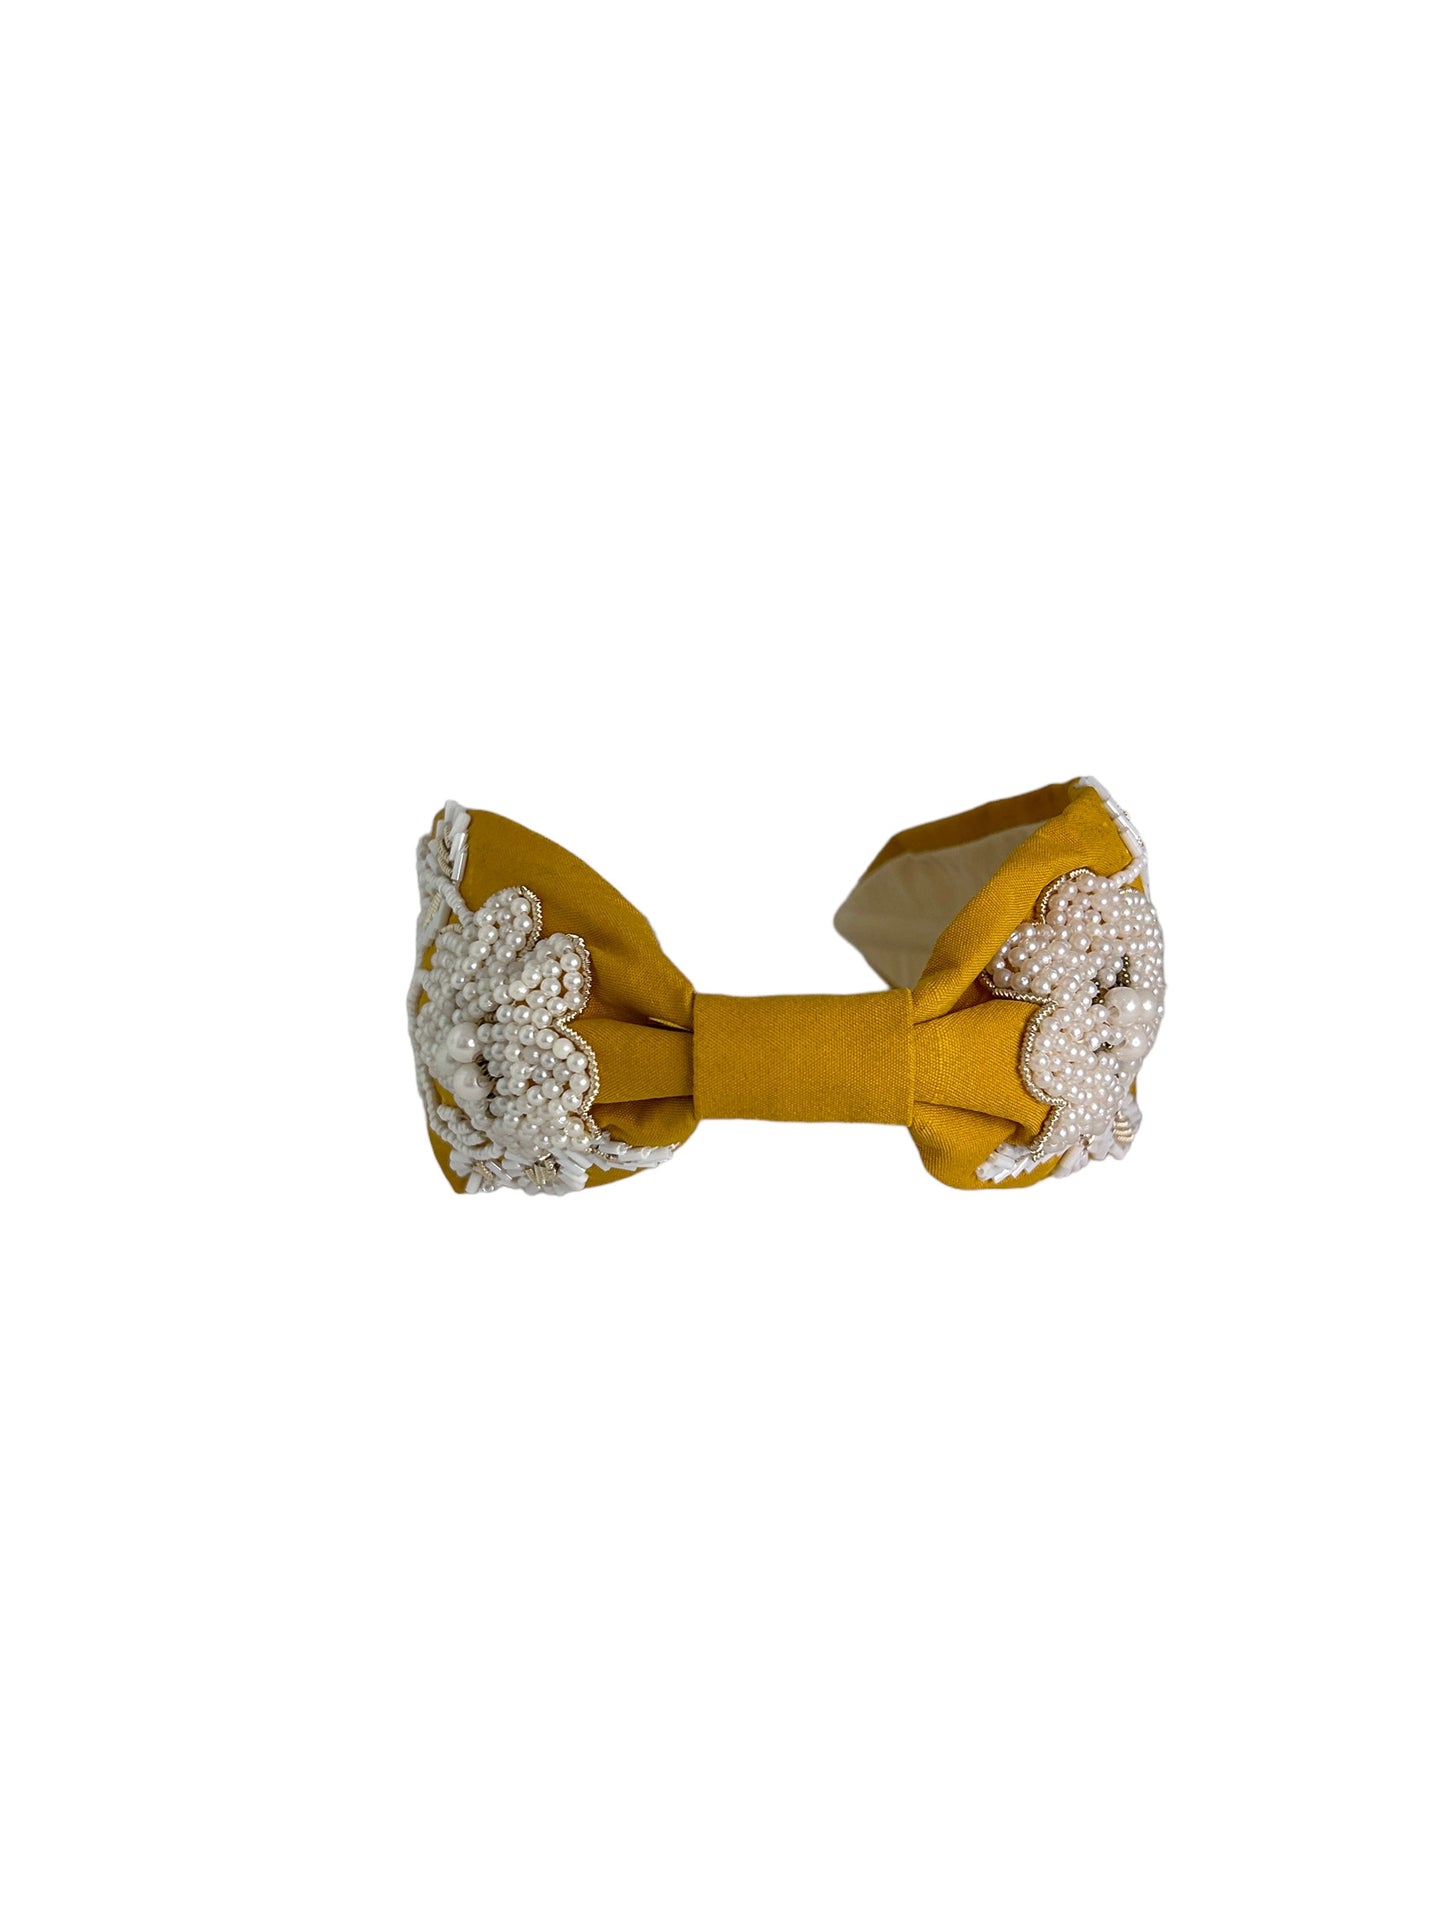 Headbands - Mustard with White Flowers